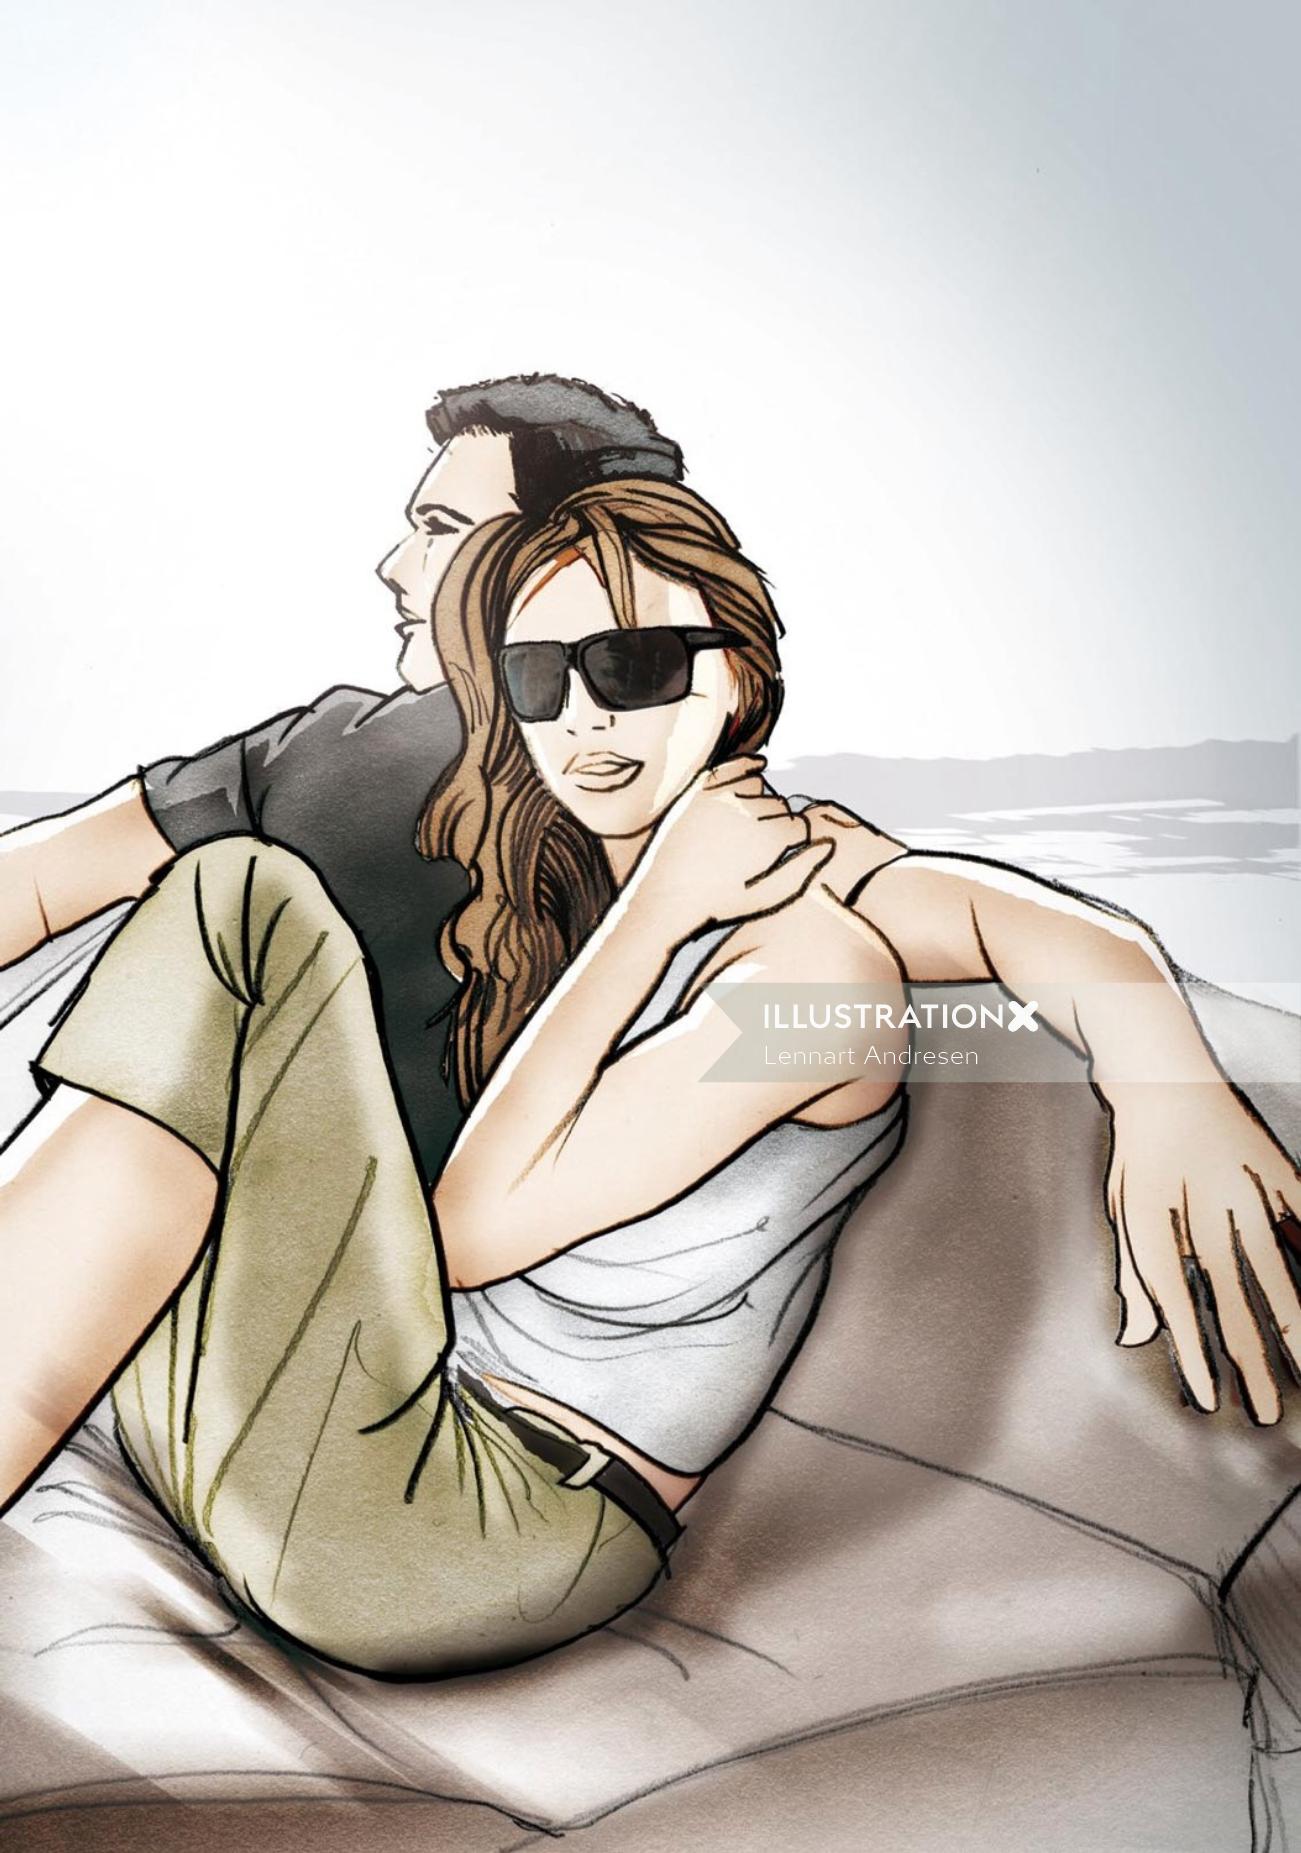 Storyboard of Happy couple enjoyng beach ride